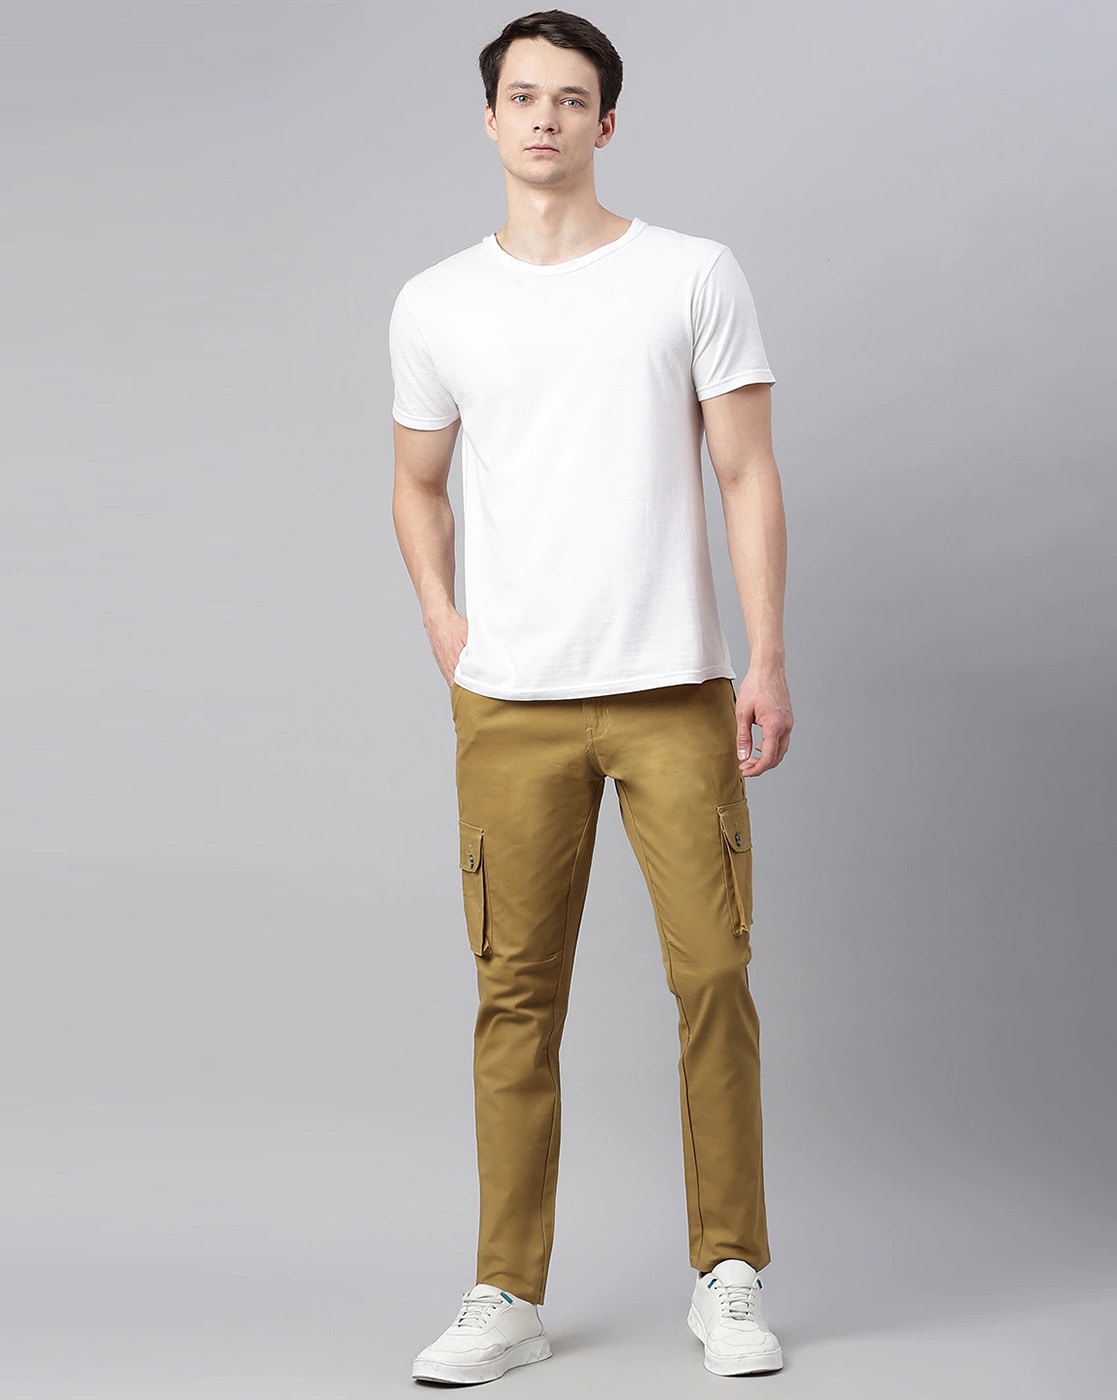 Beige Linen Pants – Style Me Luxe